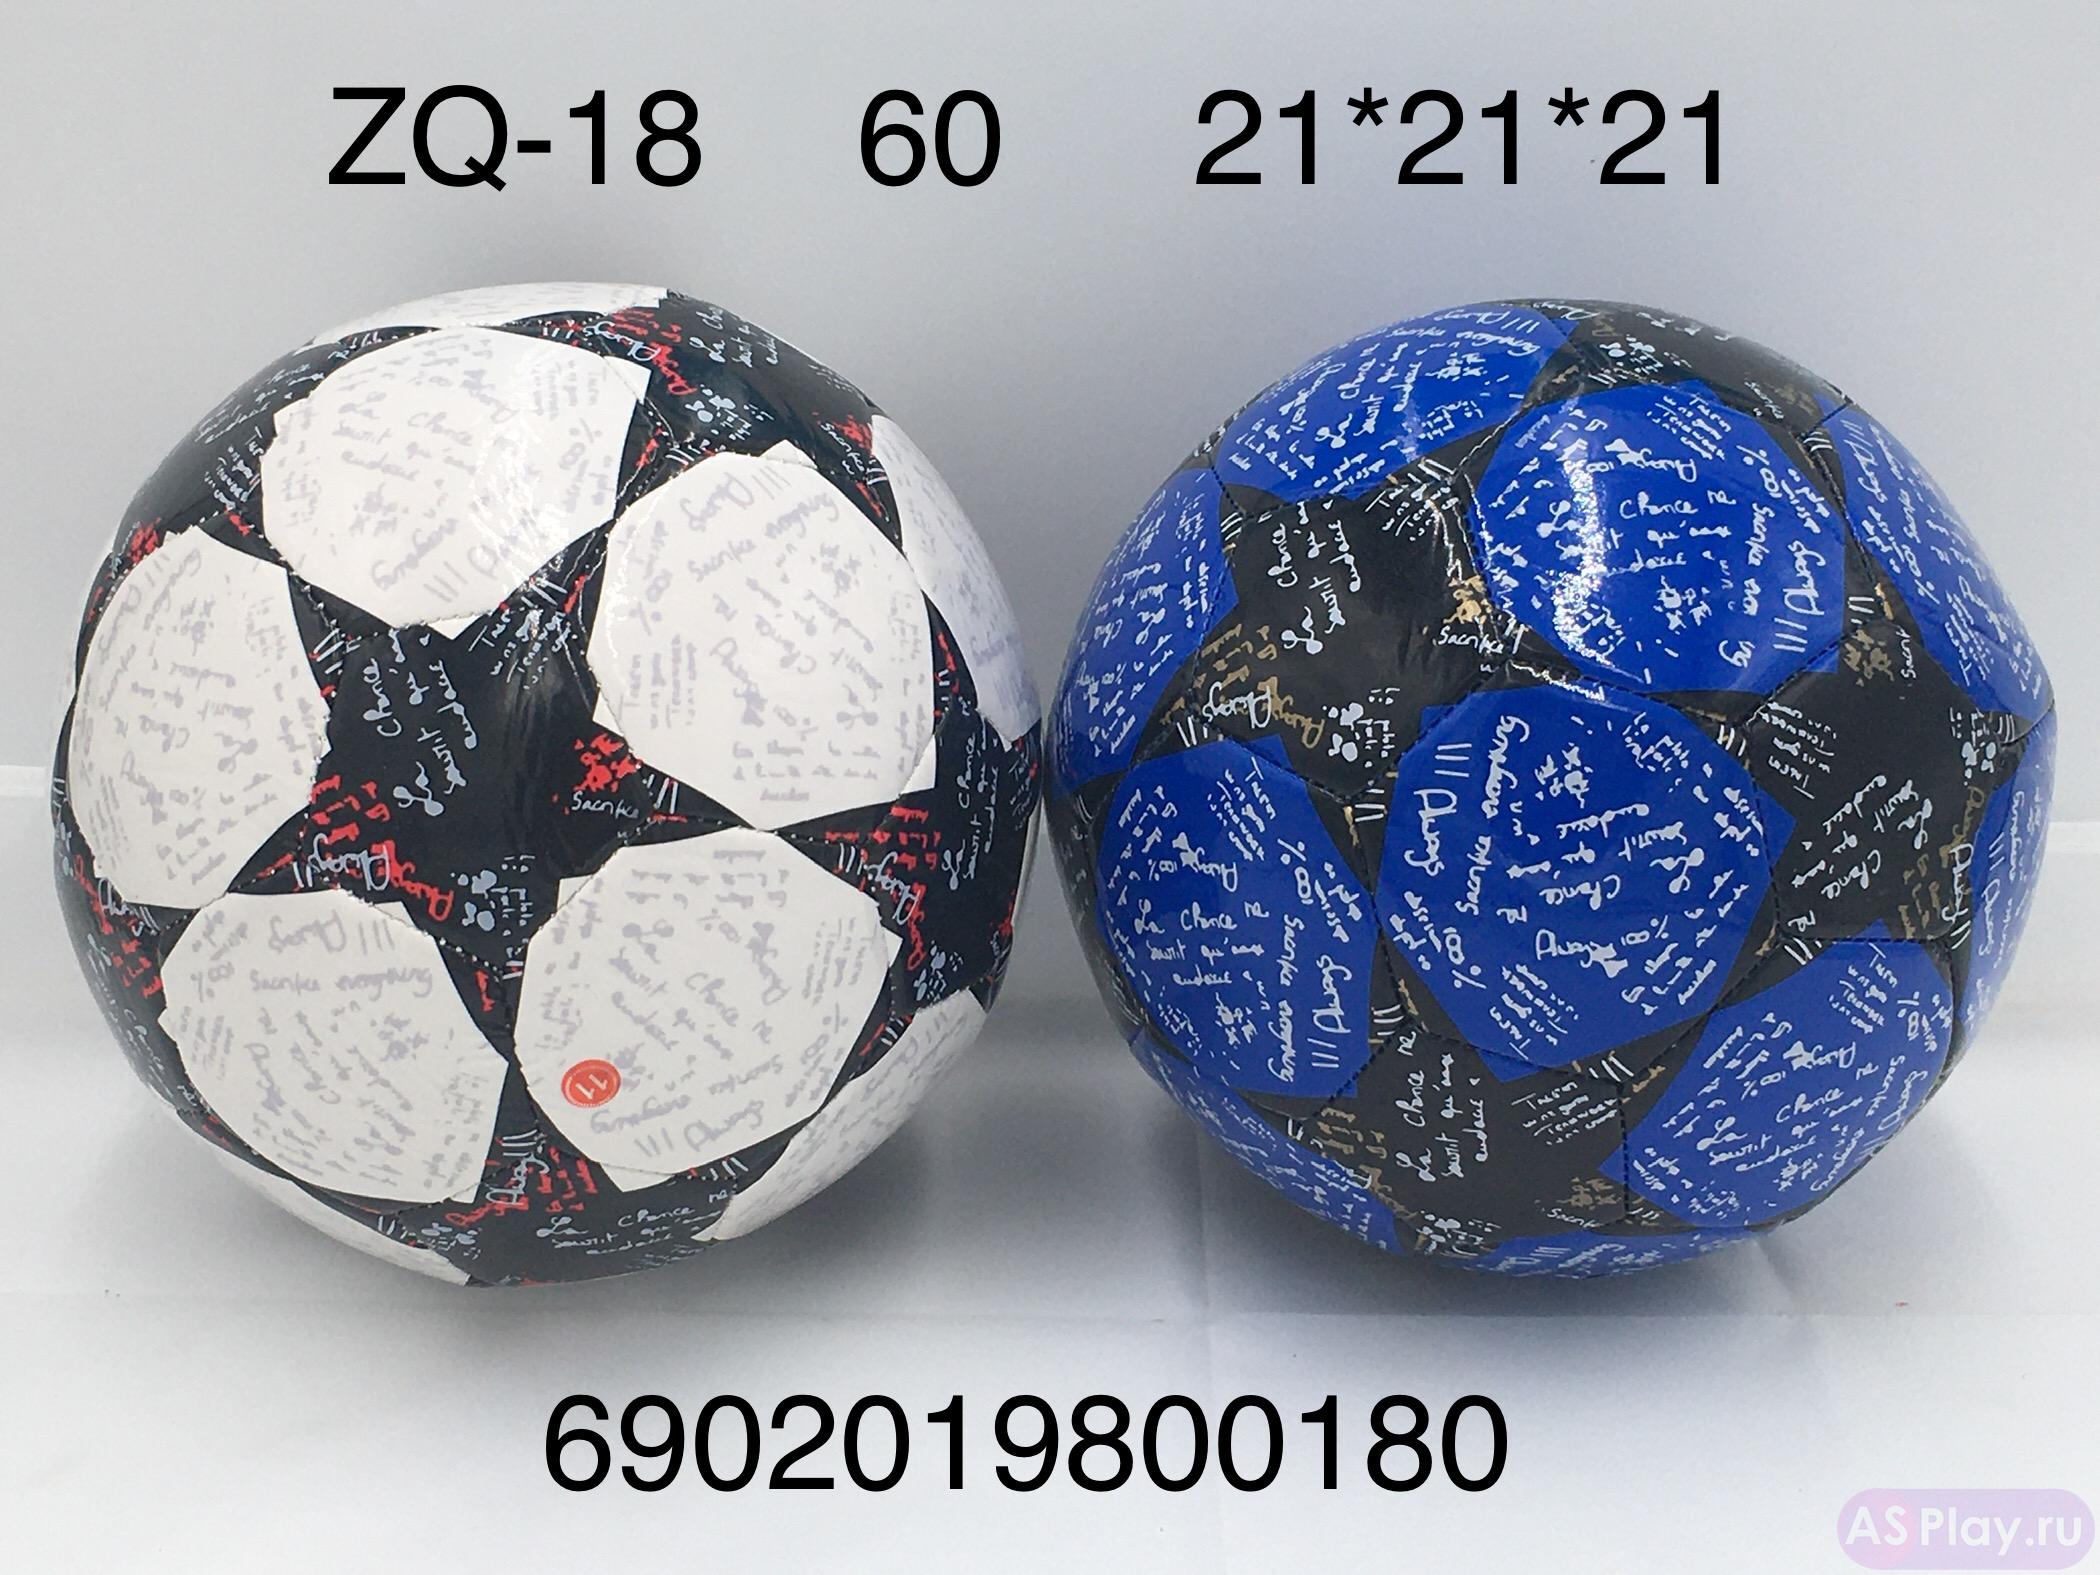 ZQ-18 Мяч гандбол, 60 шт. в кор.  ZQ-18